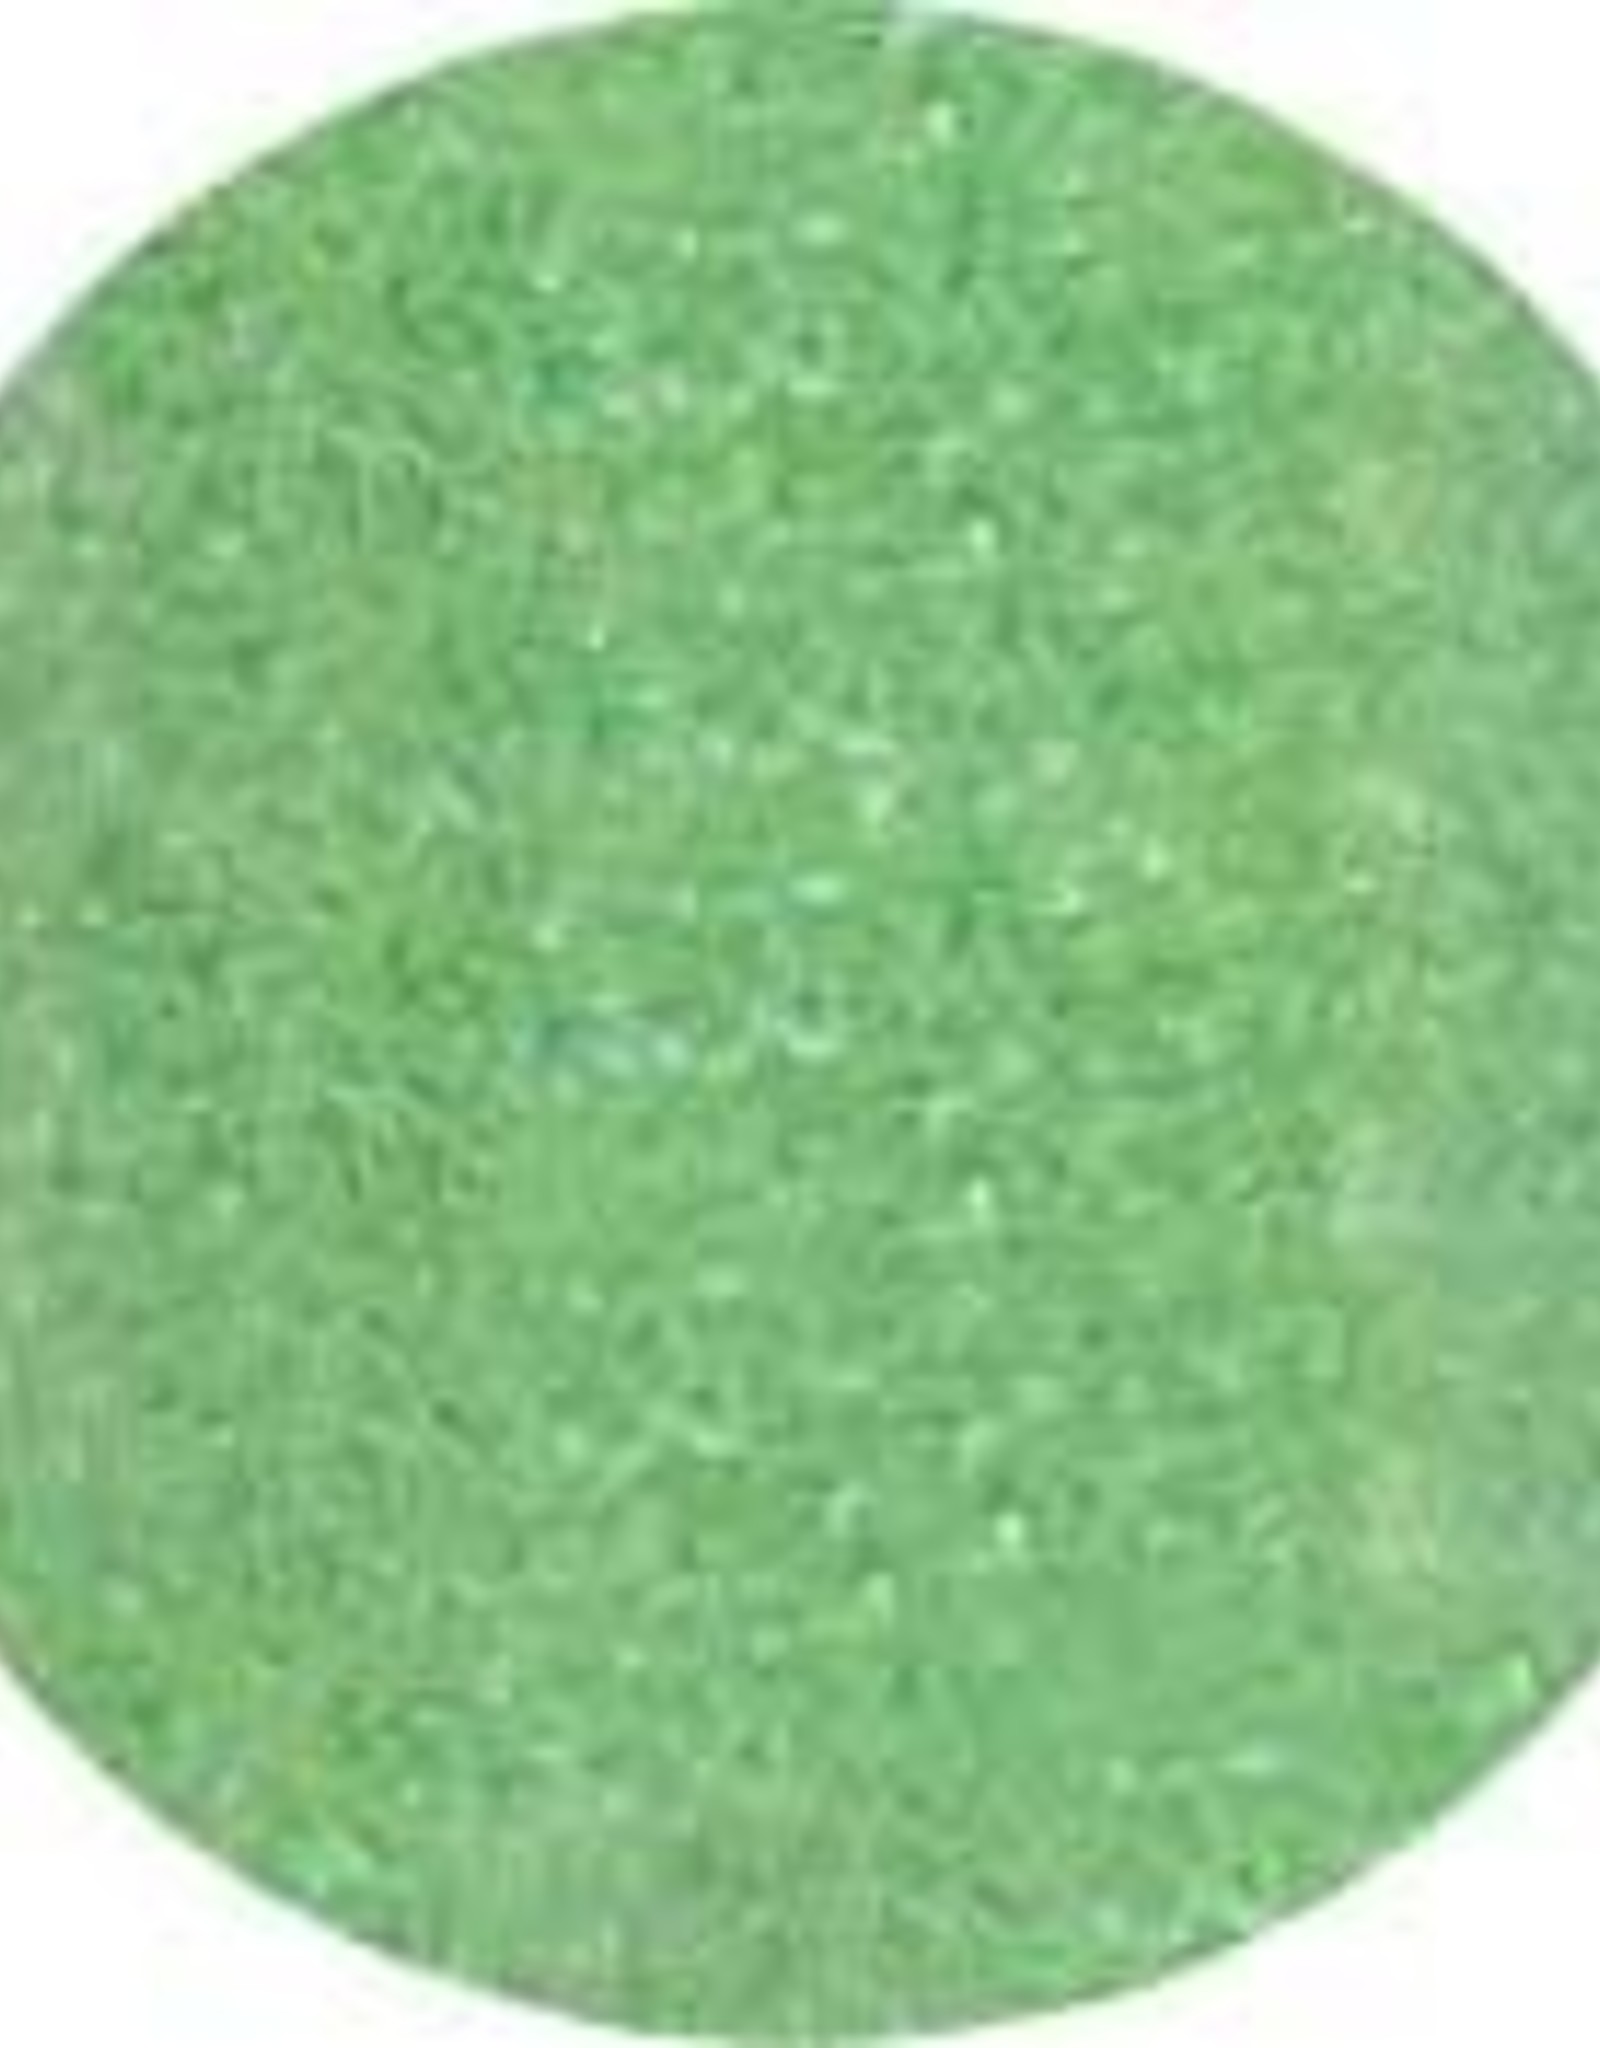 Green (Lime) Sanding Sugar